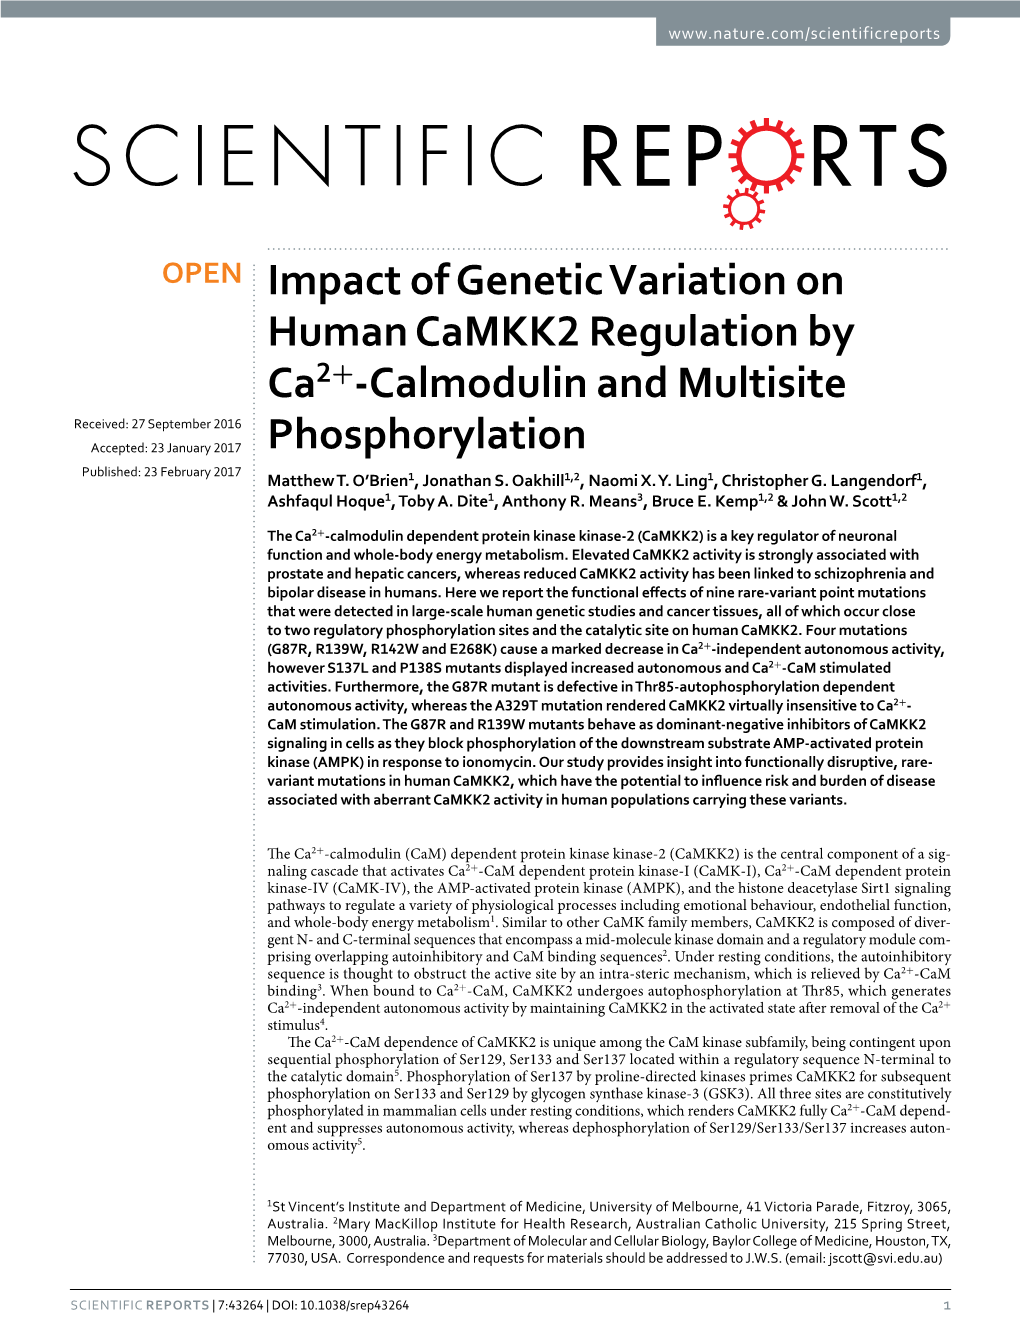 Impact of Genetic Variation on Human Camkk2